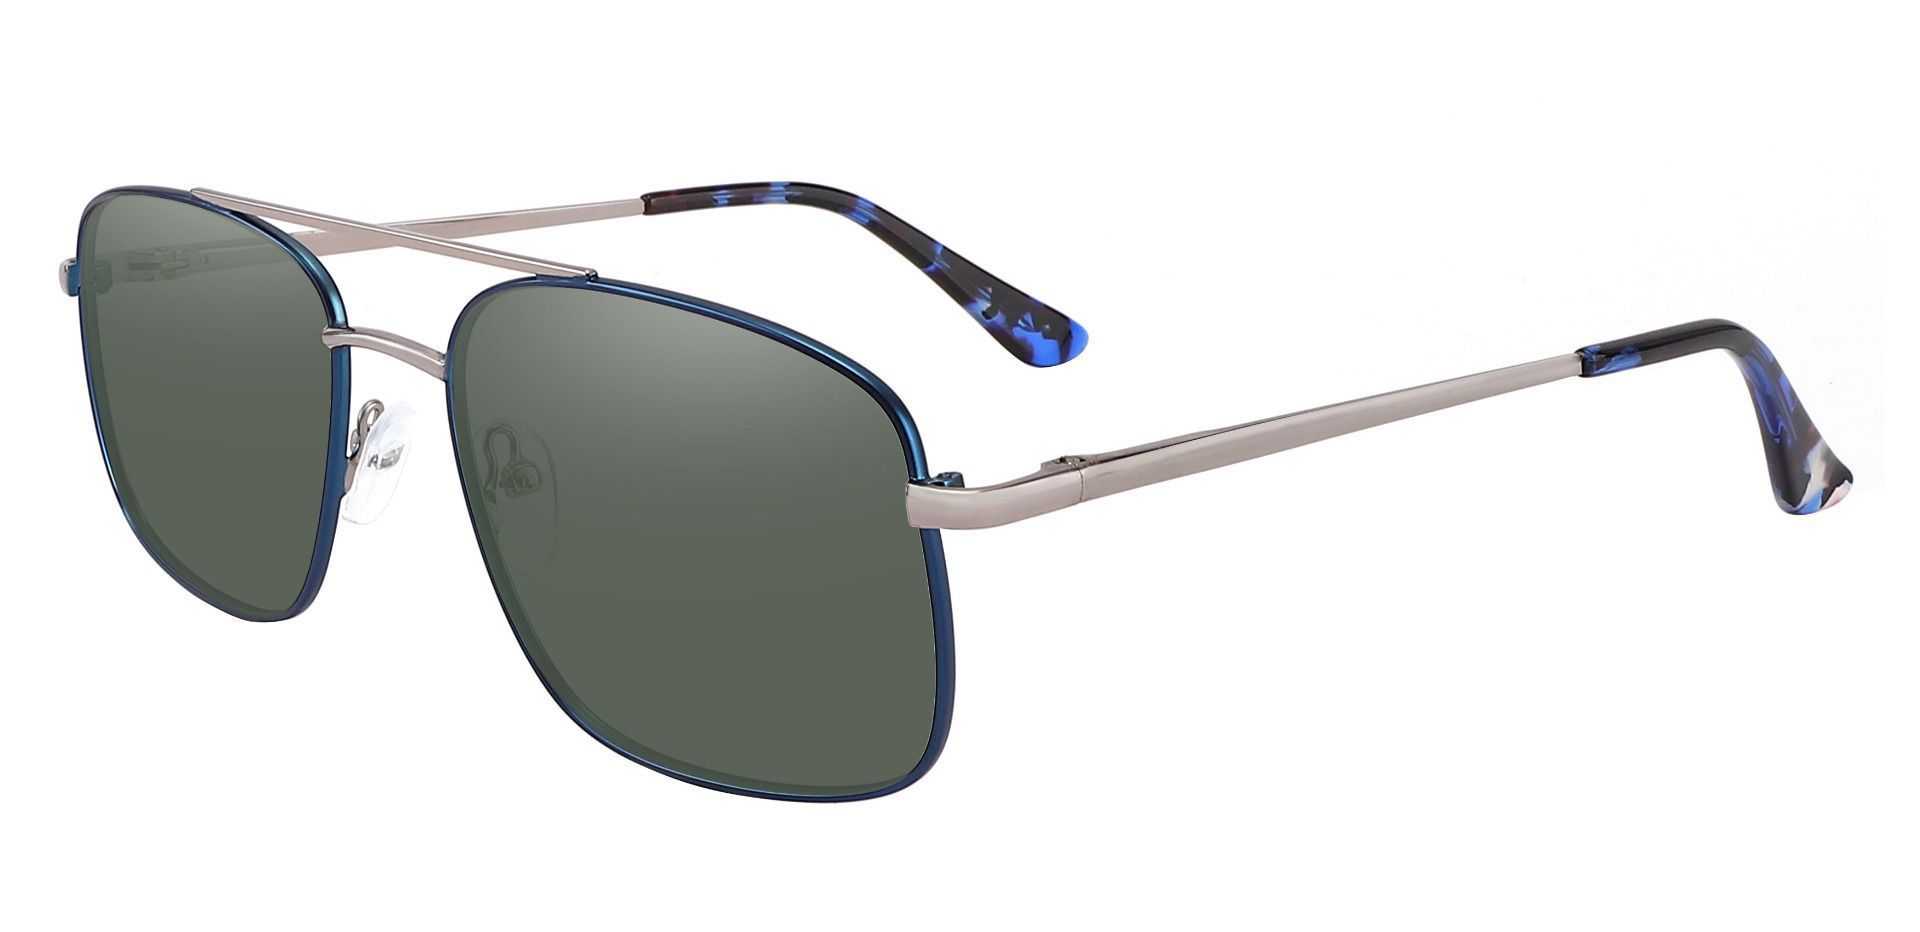 Hiram Aviator Progressive Sunglasses - Blue Frame With Green Lenses